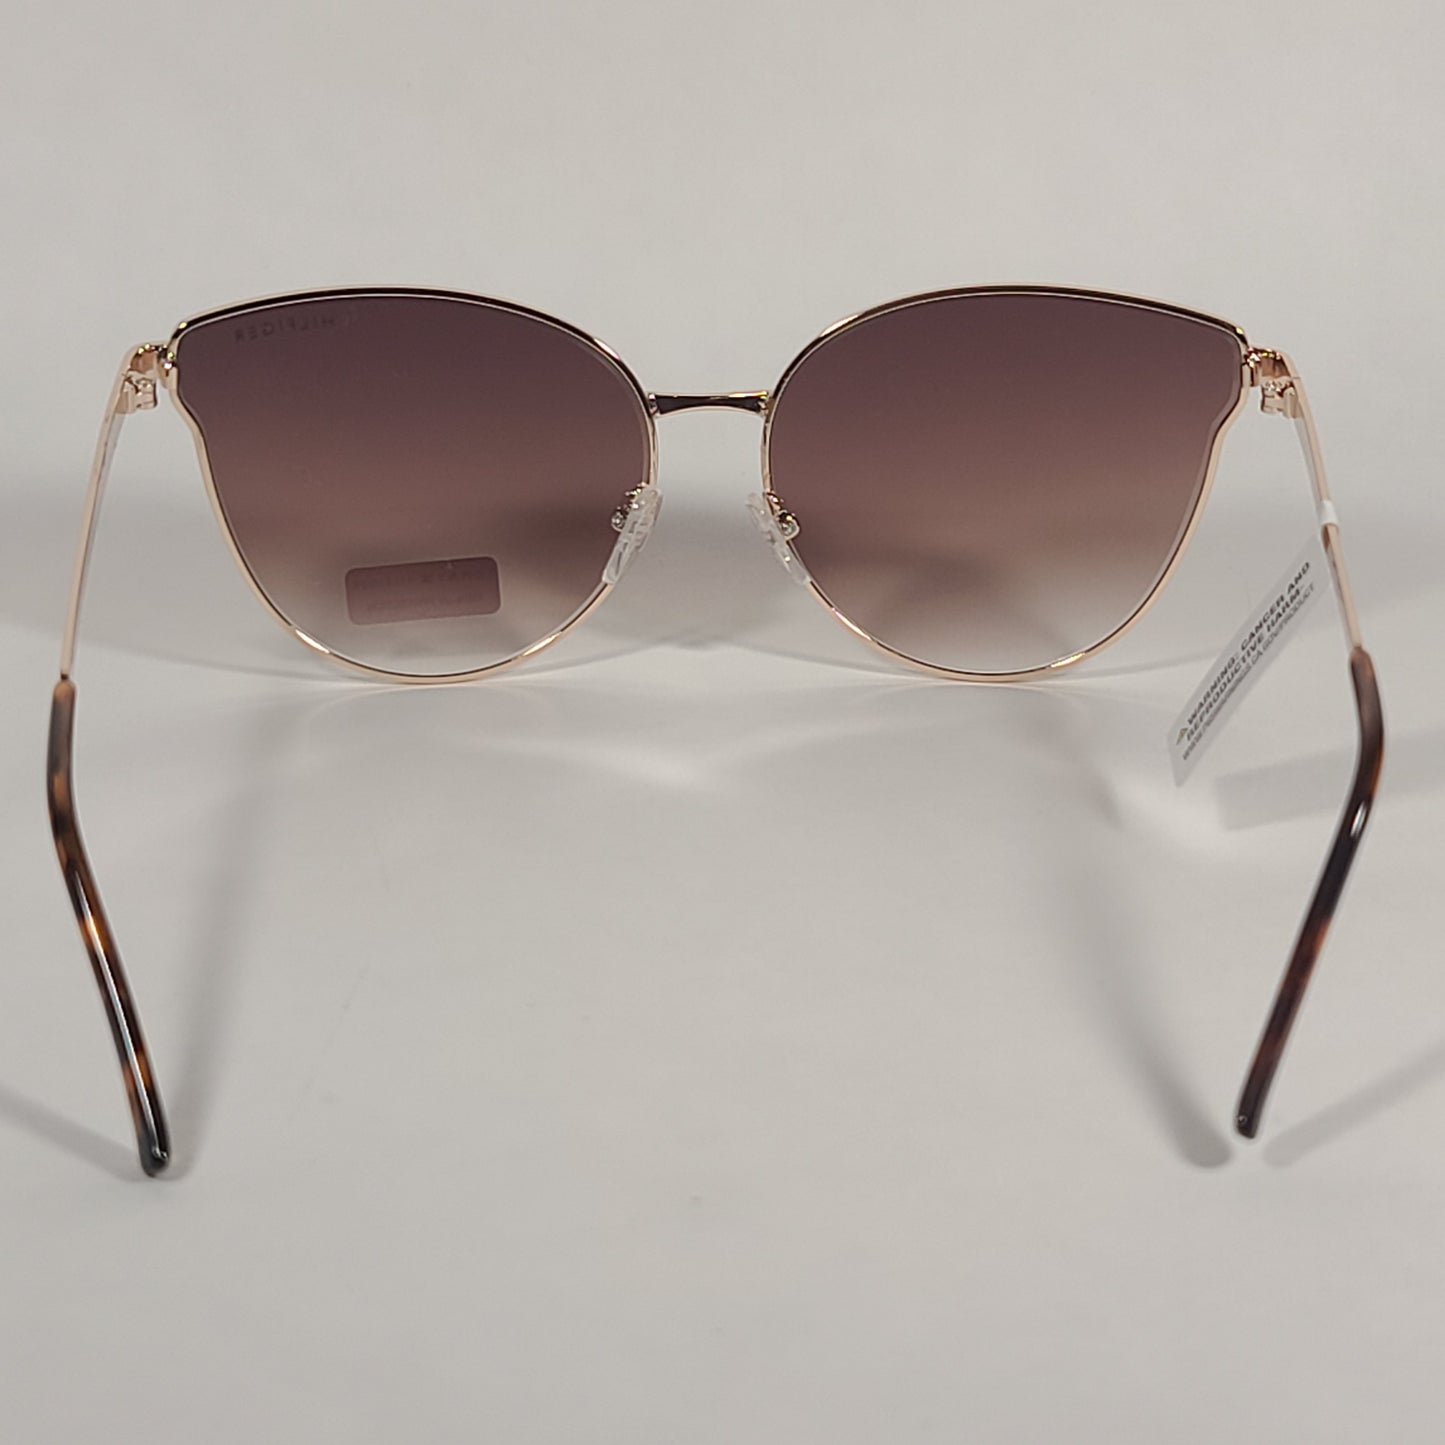 Tommy Hilfiger Zendaya Cat Eye Sunglasses Gold Frame Brown Gradient Lens ZENDAYA WM OL482 - Sunglasses